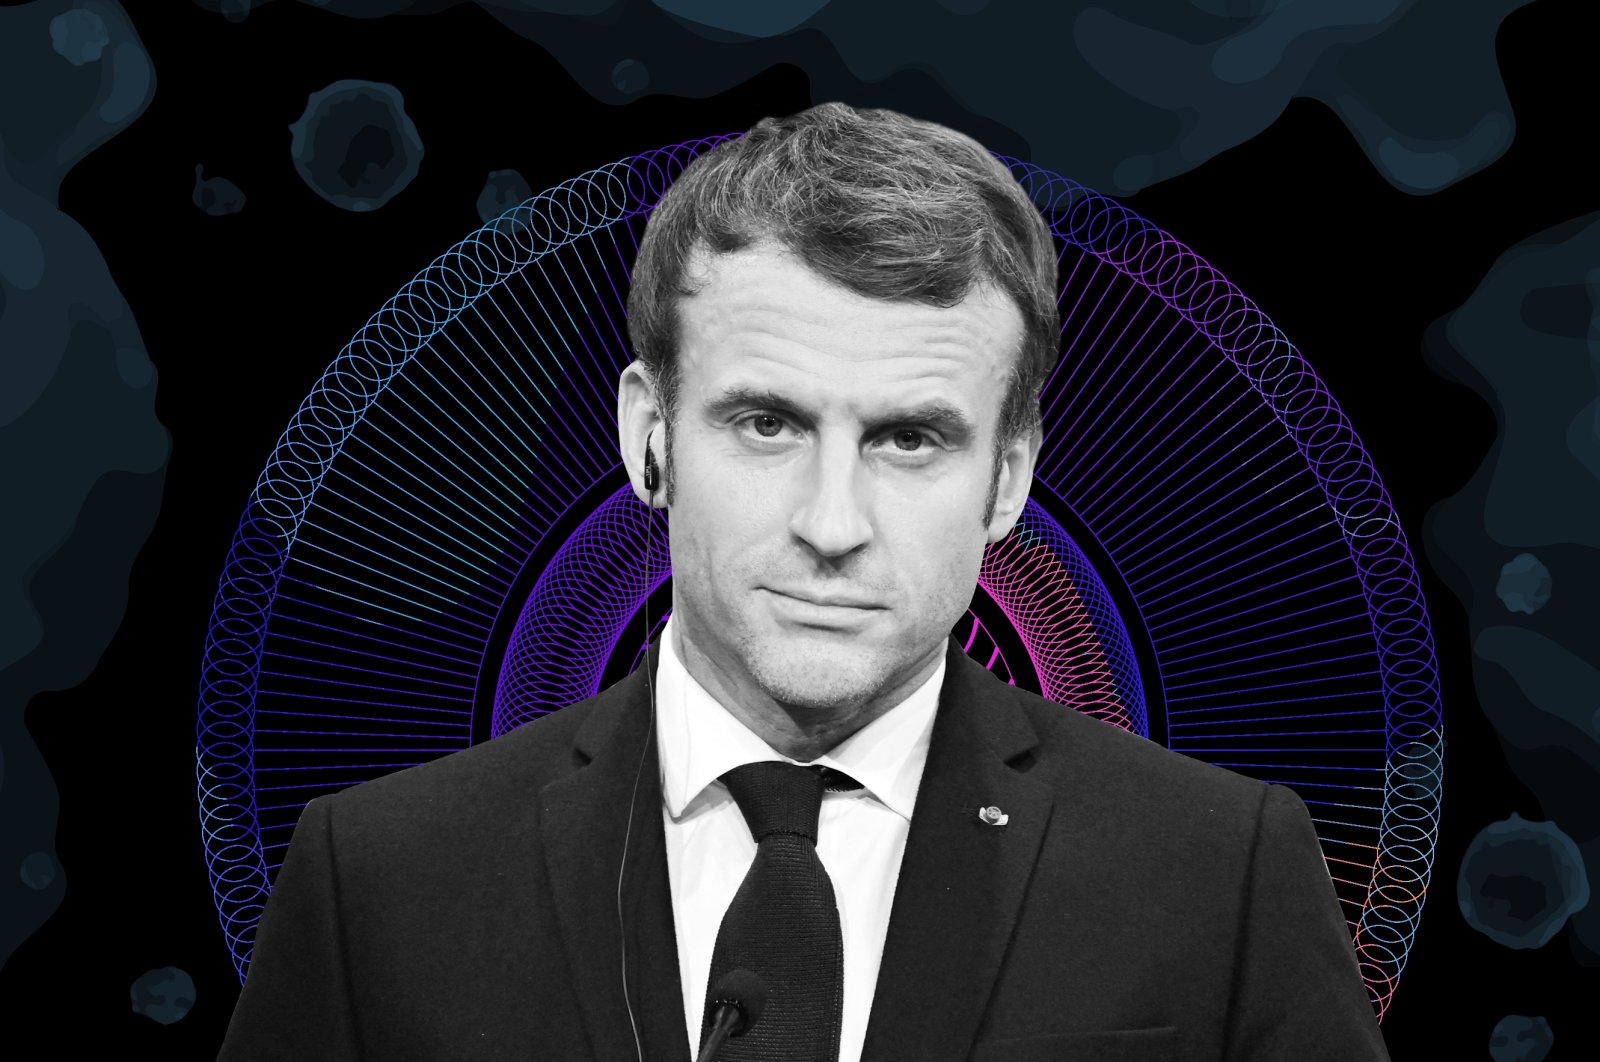 French President Emmanuel Macron. (Illustration edited by Büşra Öztürk)